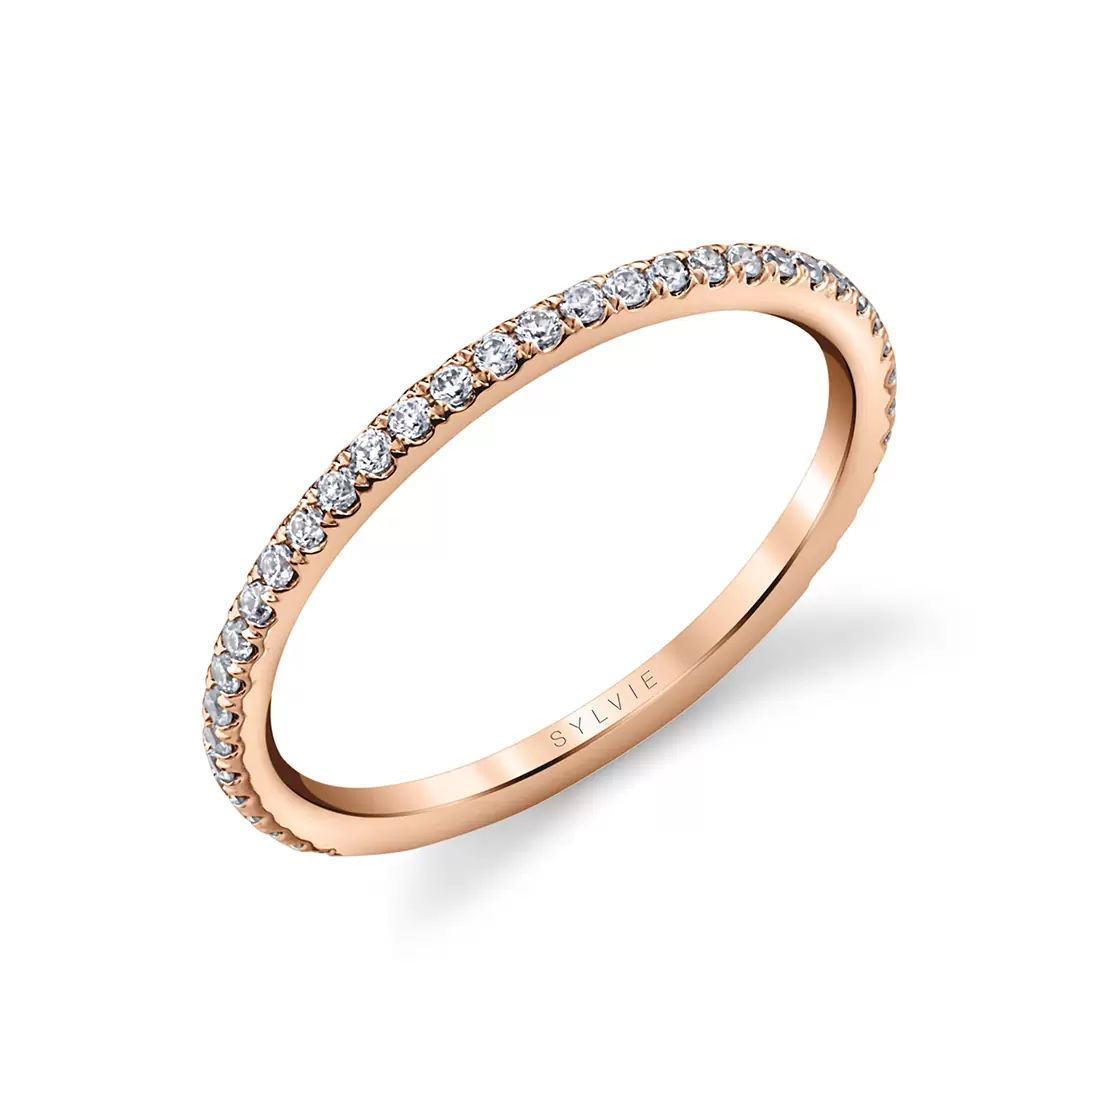 Rose gold, diamond classic wedding ring